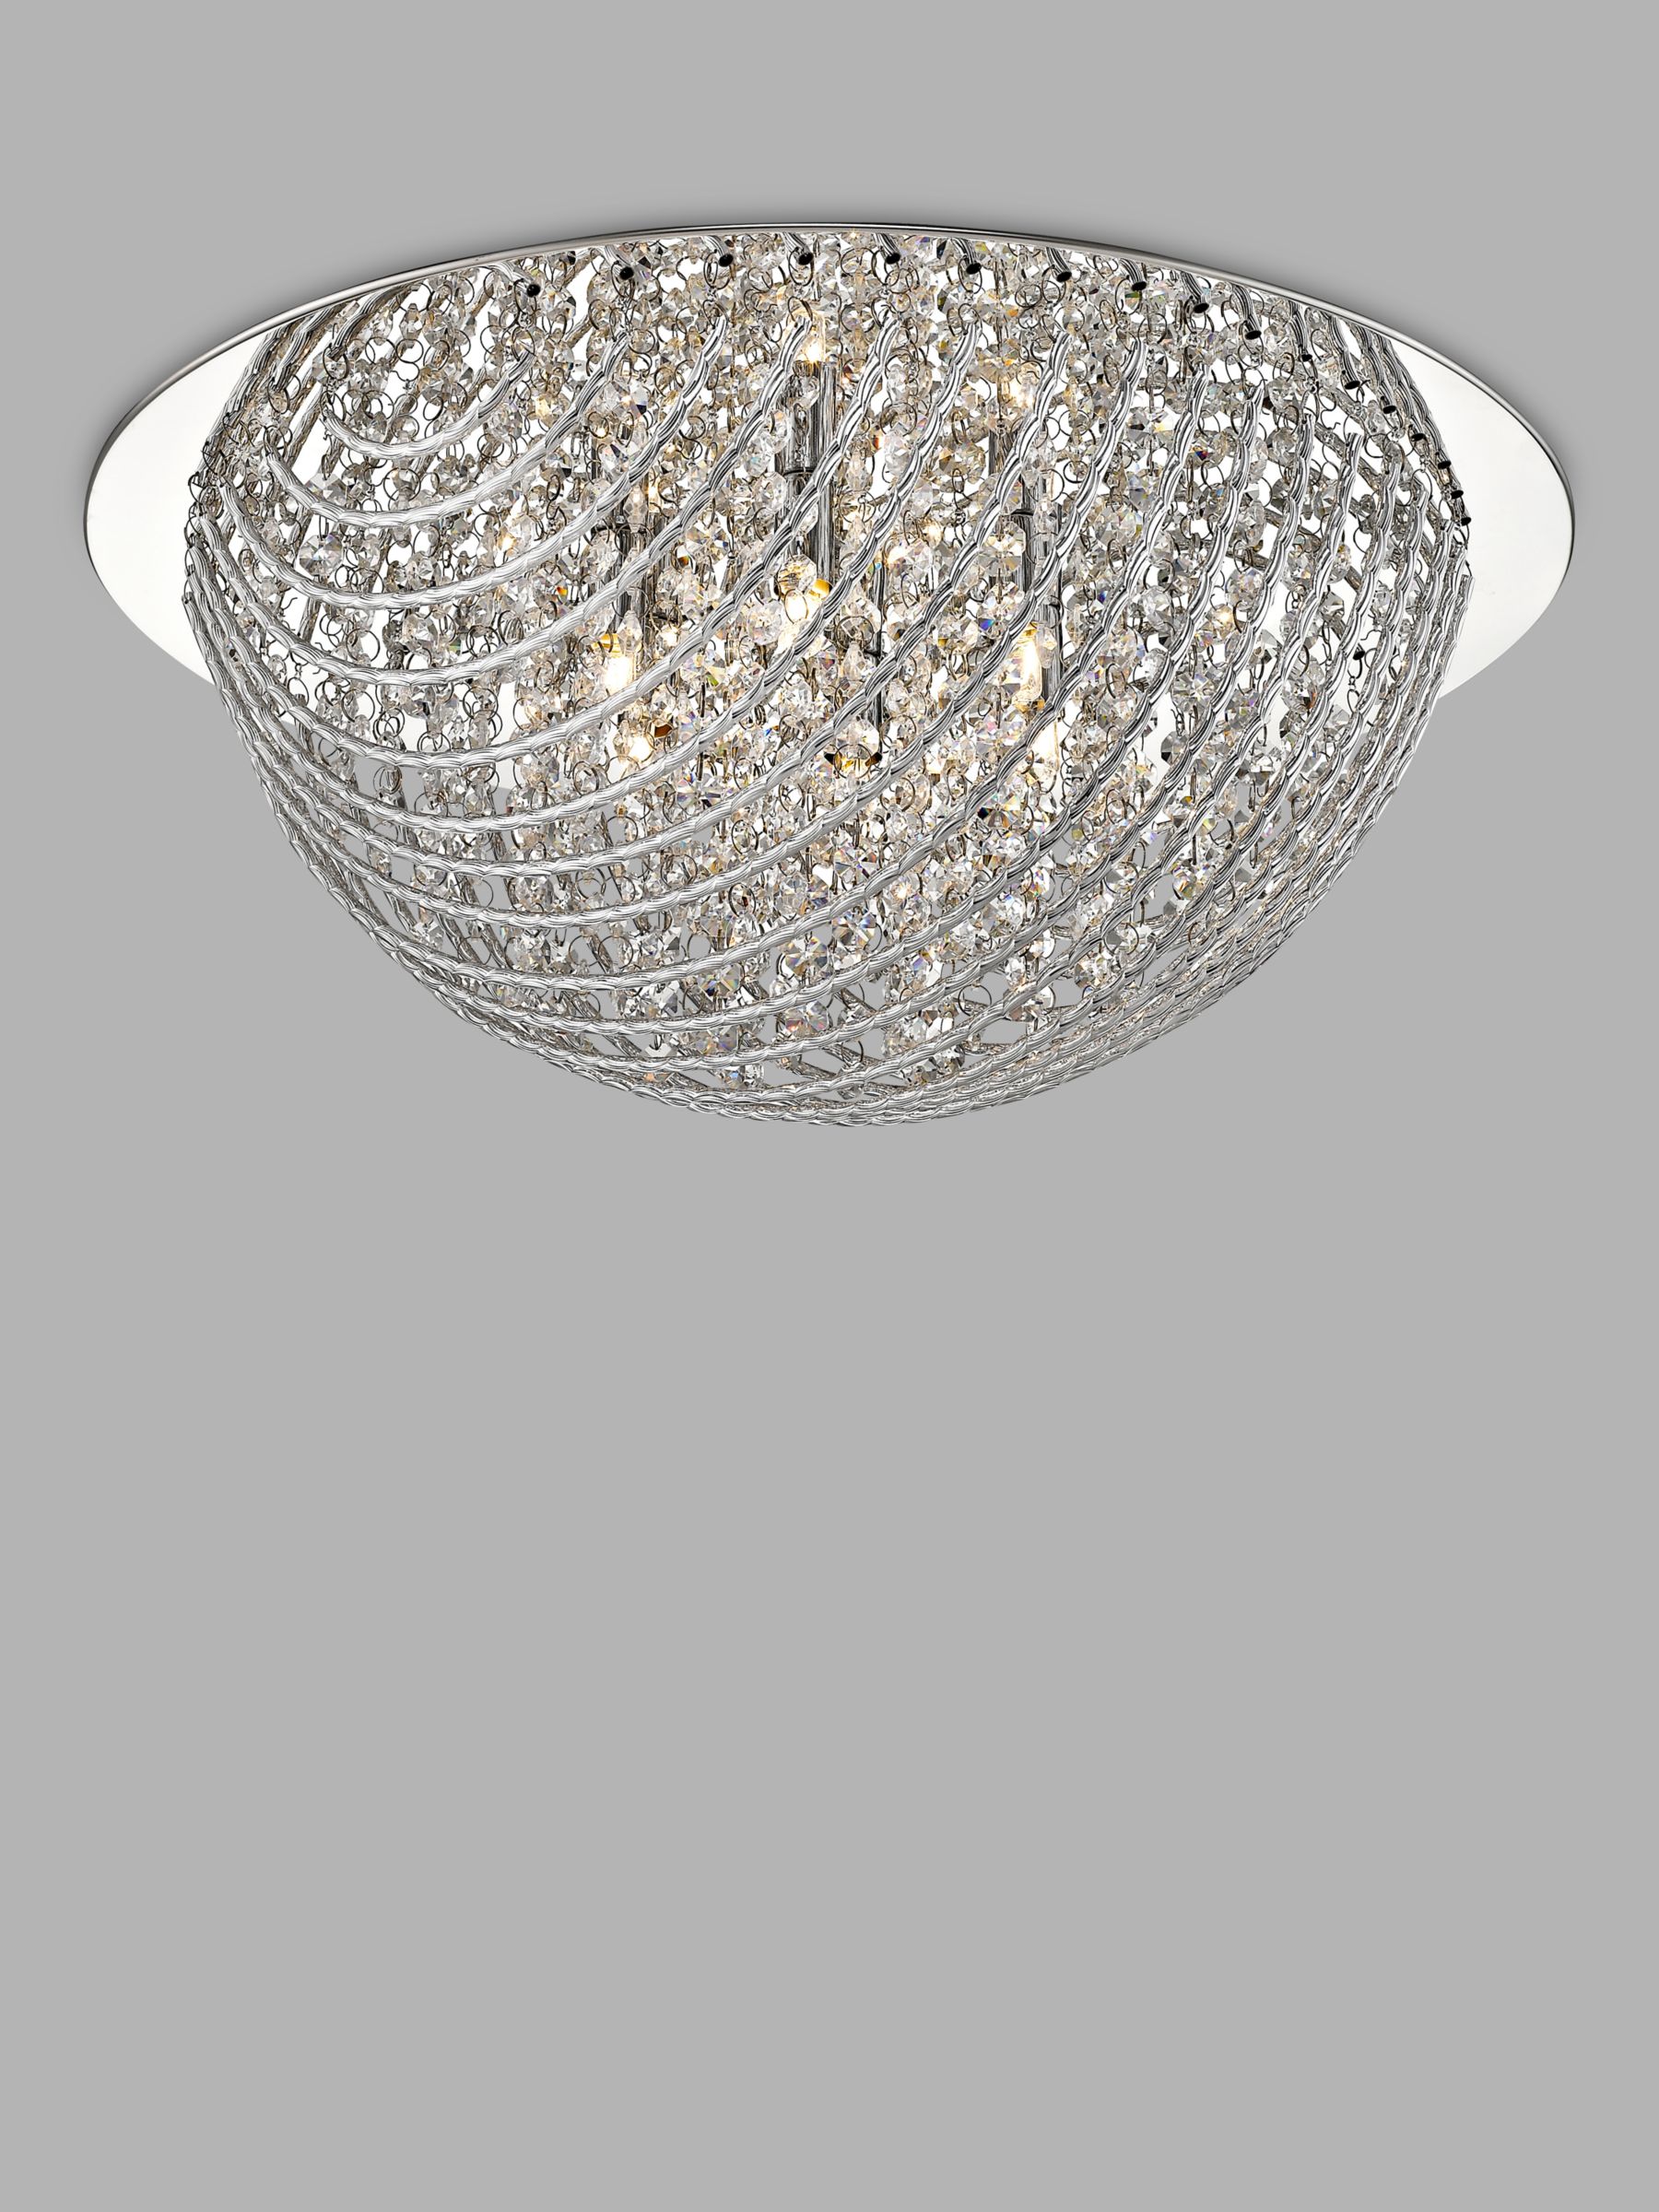 Photo of Impex millie crystal flush ceiling light large chrome